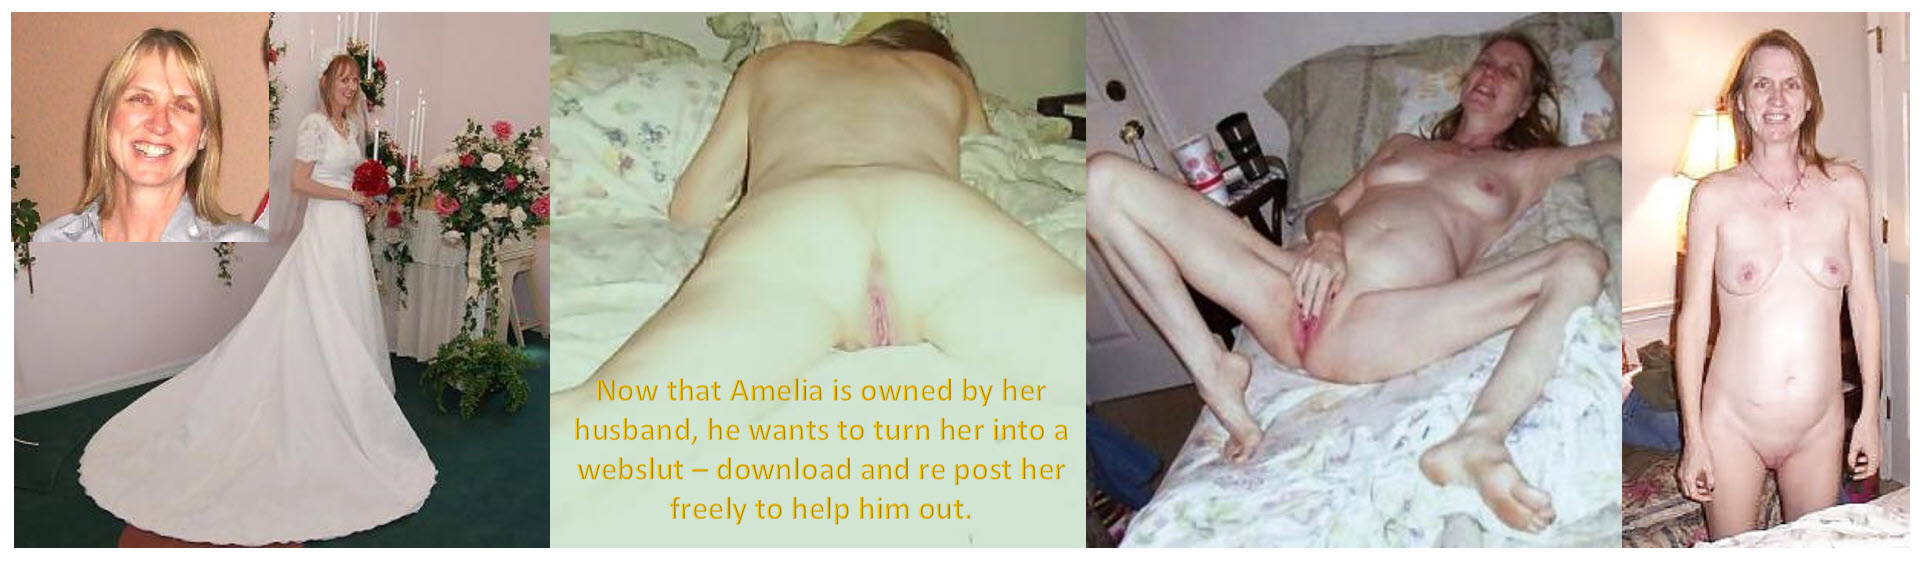 Help make Amelia a webslut